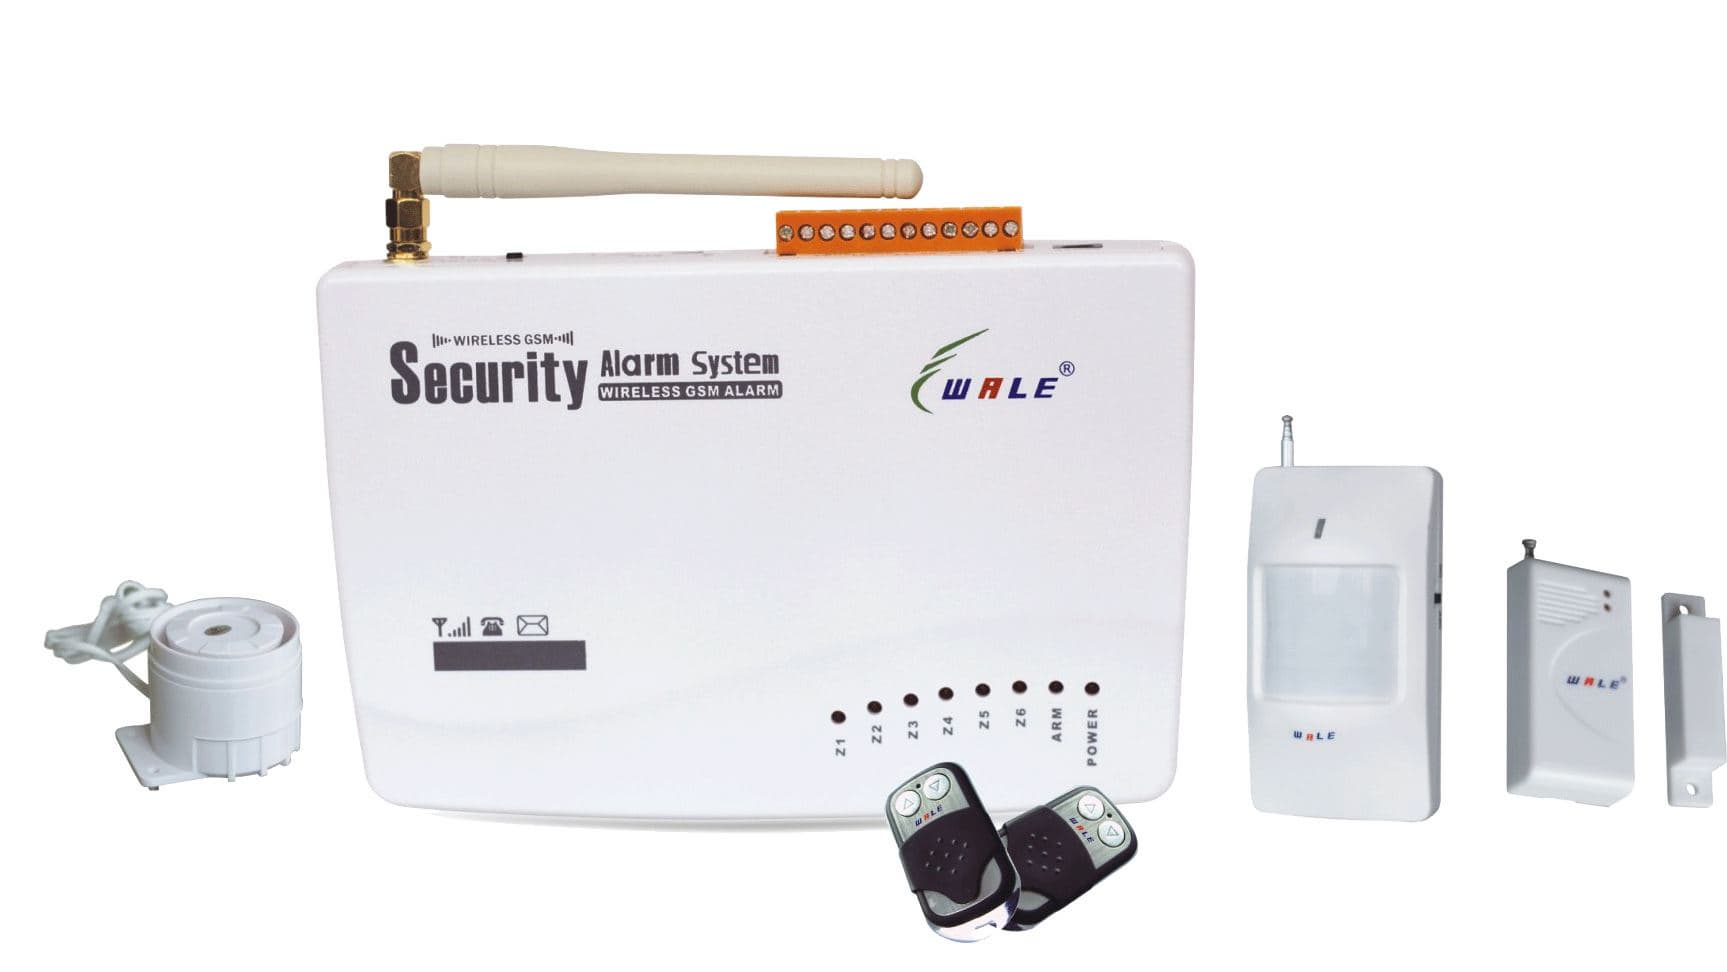 GSM intelligent wireless alarm system control